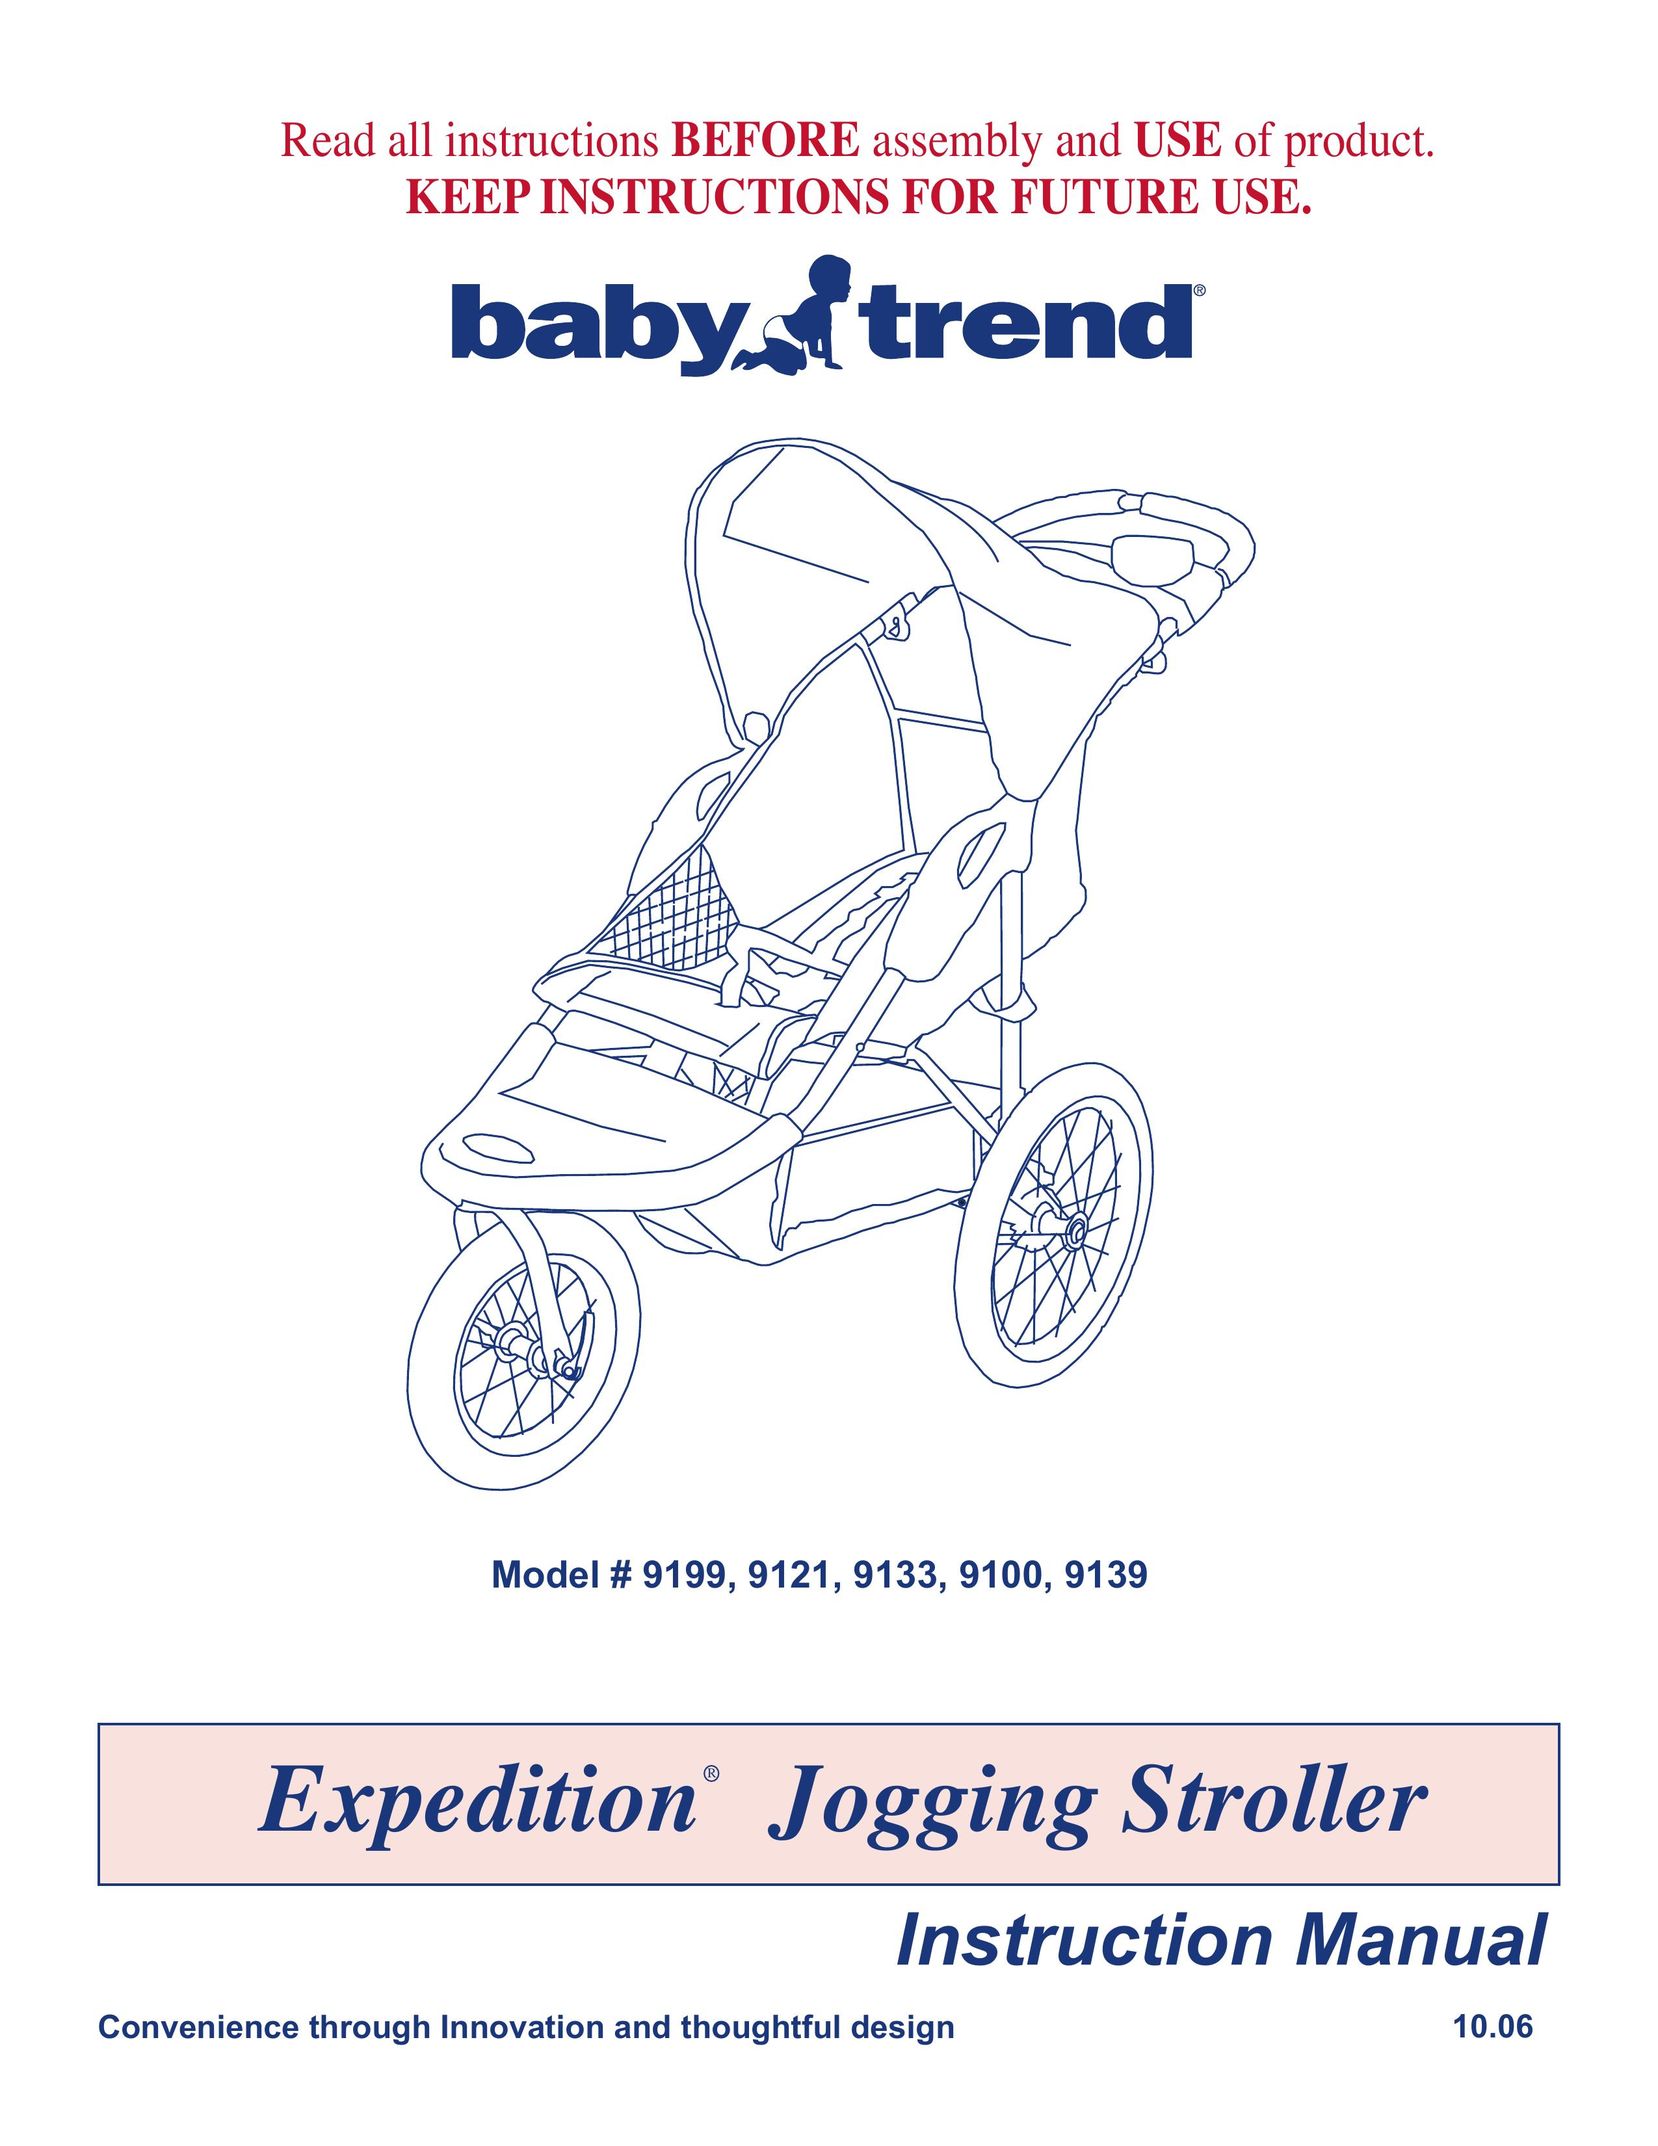 Baby Trend 9133 Stroller User Manual